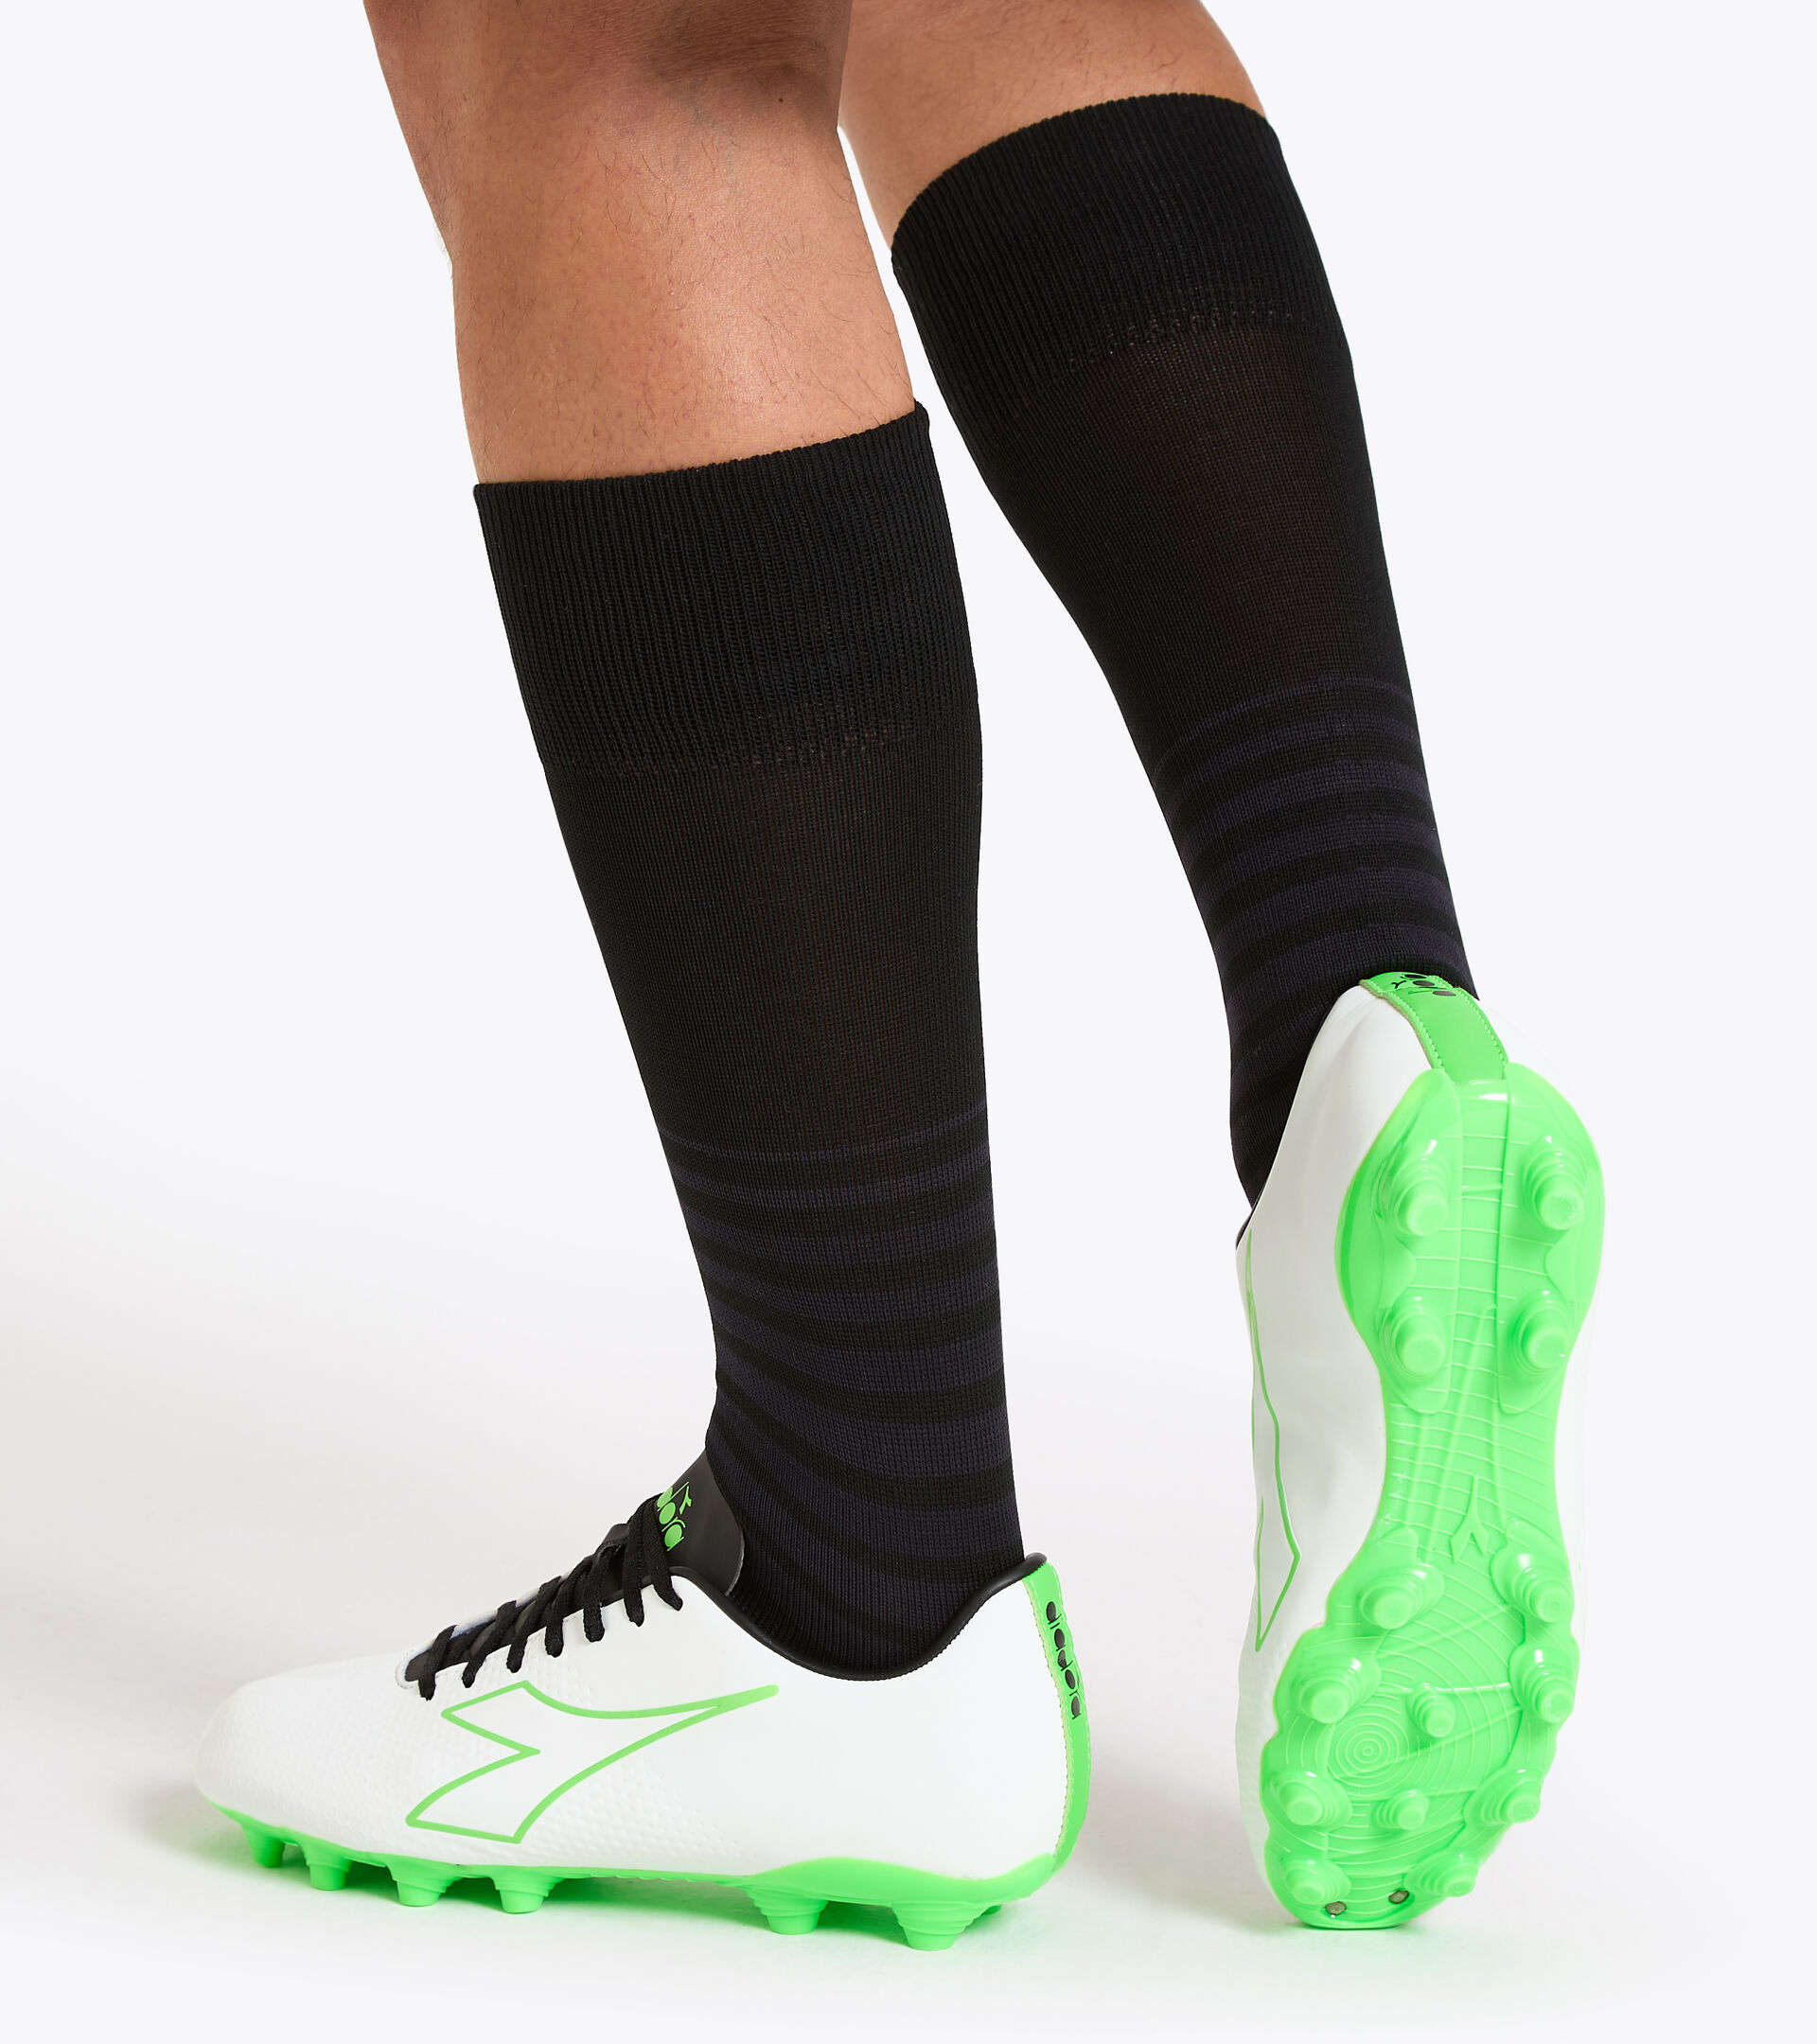 sensatie Nog steeds kleurstof PICHICHI 4 MG14 Firm ground football boots - Diadora Online Store US